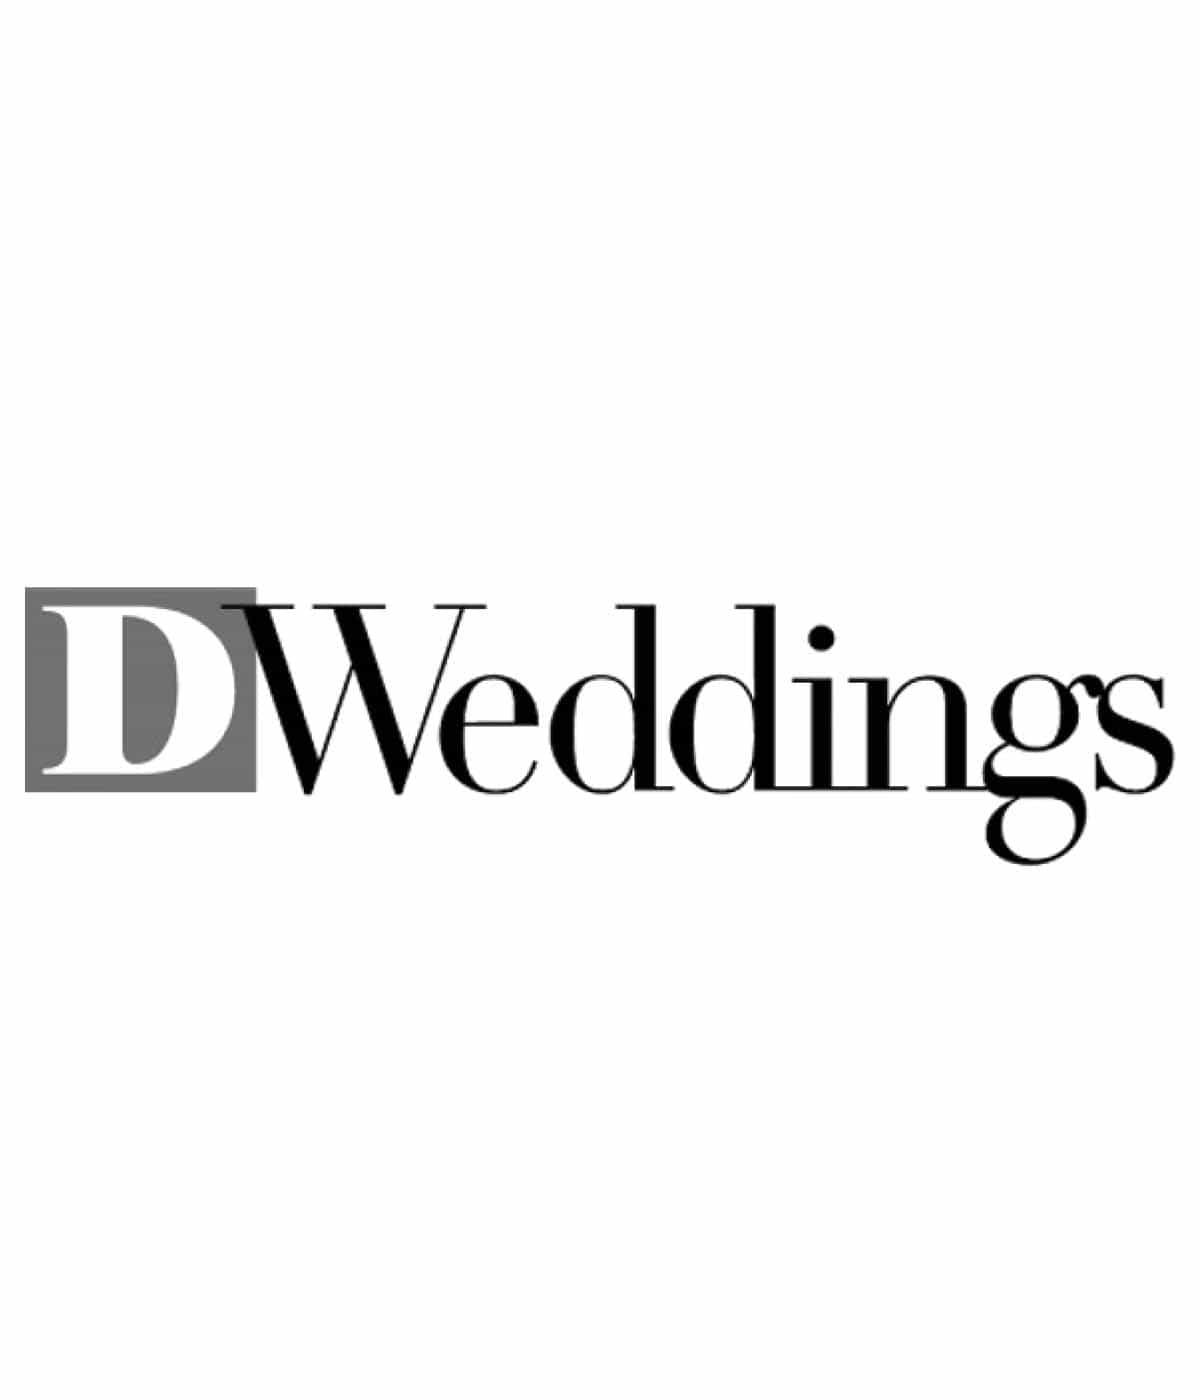 DWeddings Logo - DBAndrea